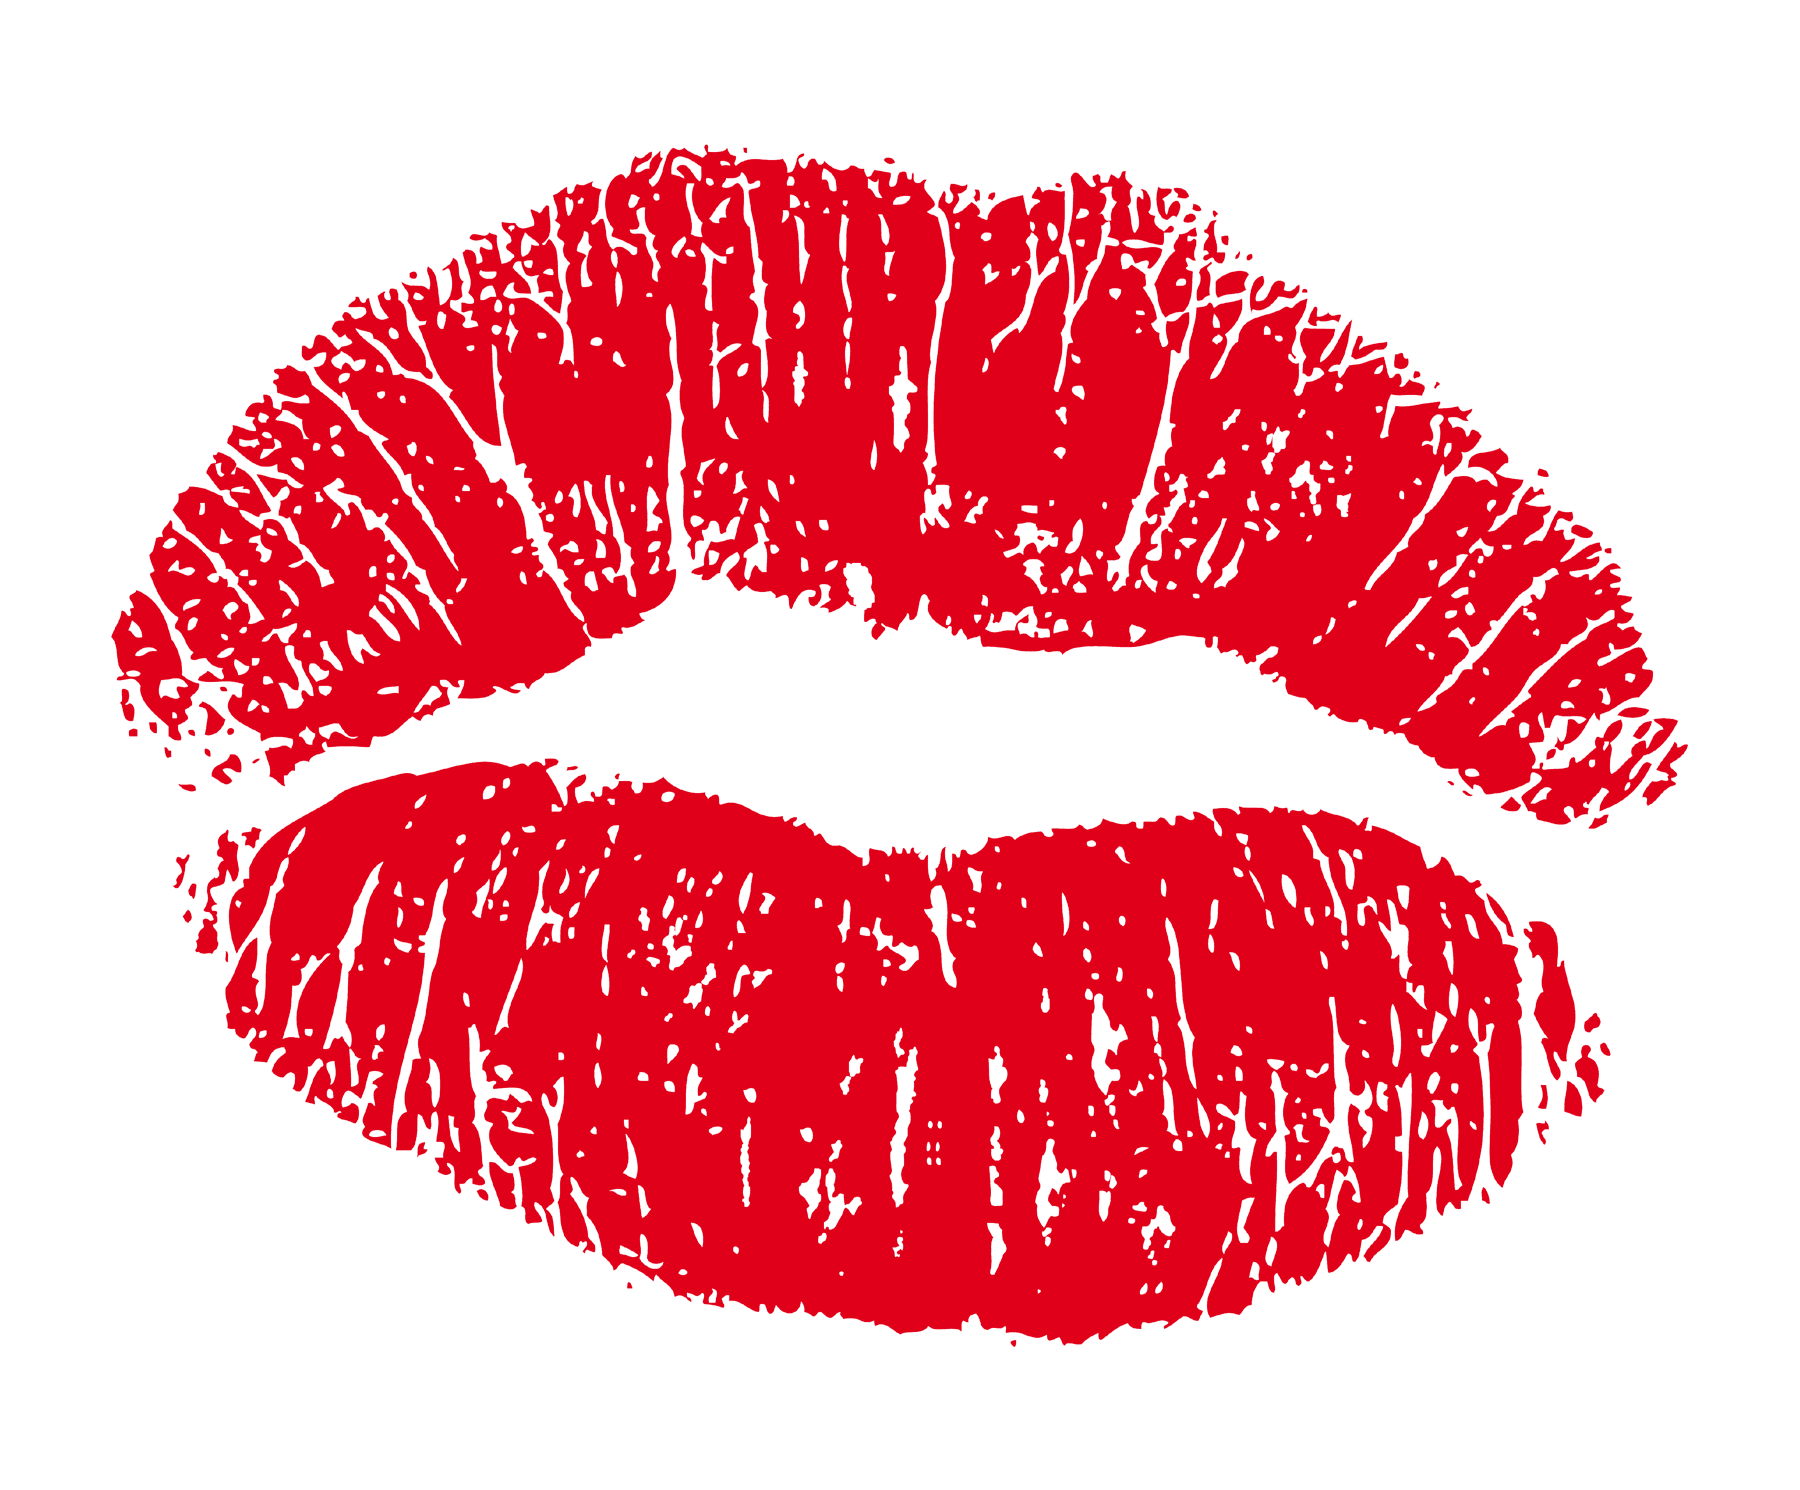 Kuss, rote Lippen